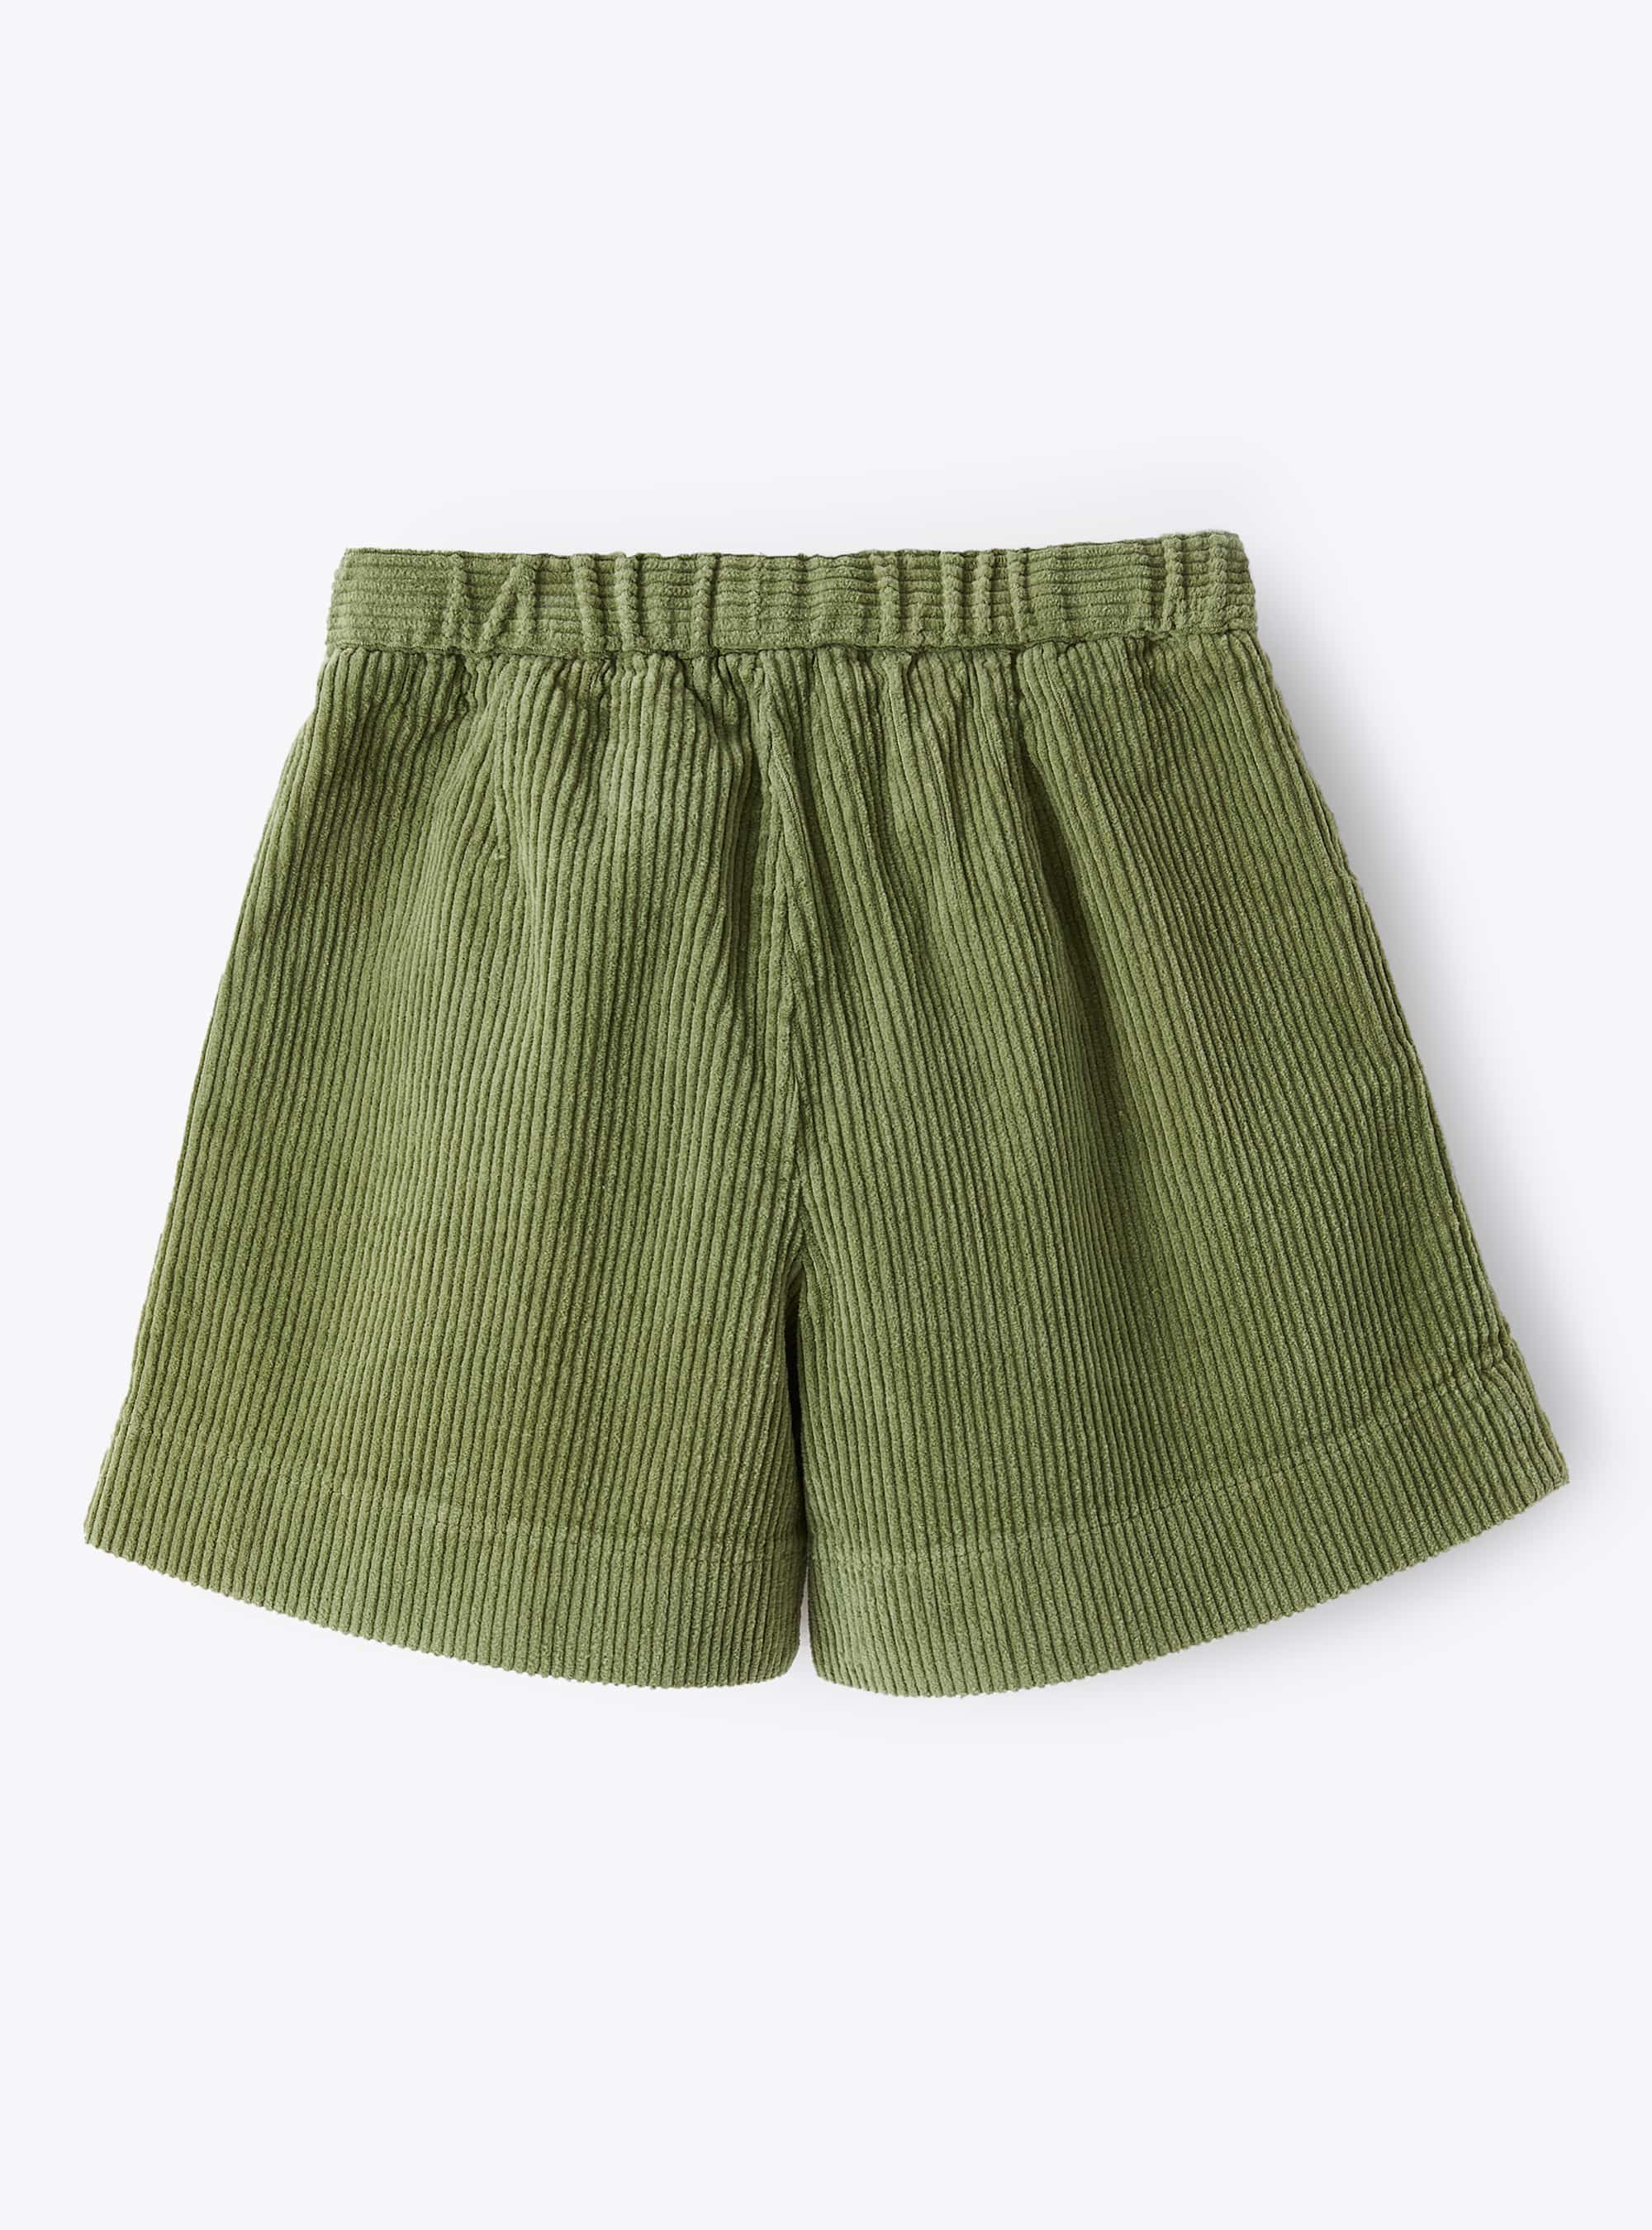 Green corduroy shorts - Green | Il Gufo